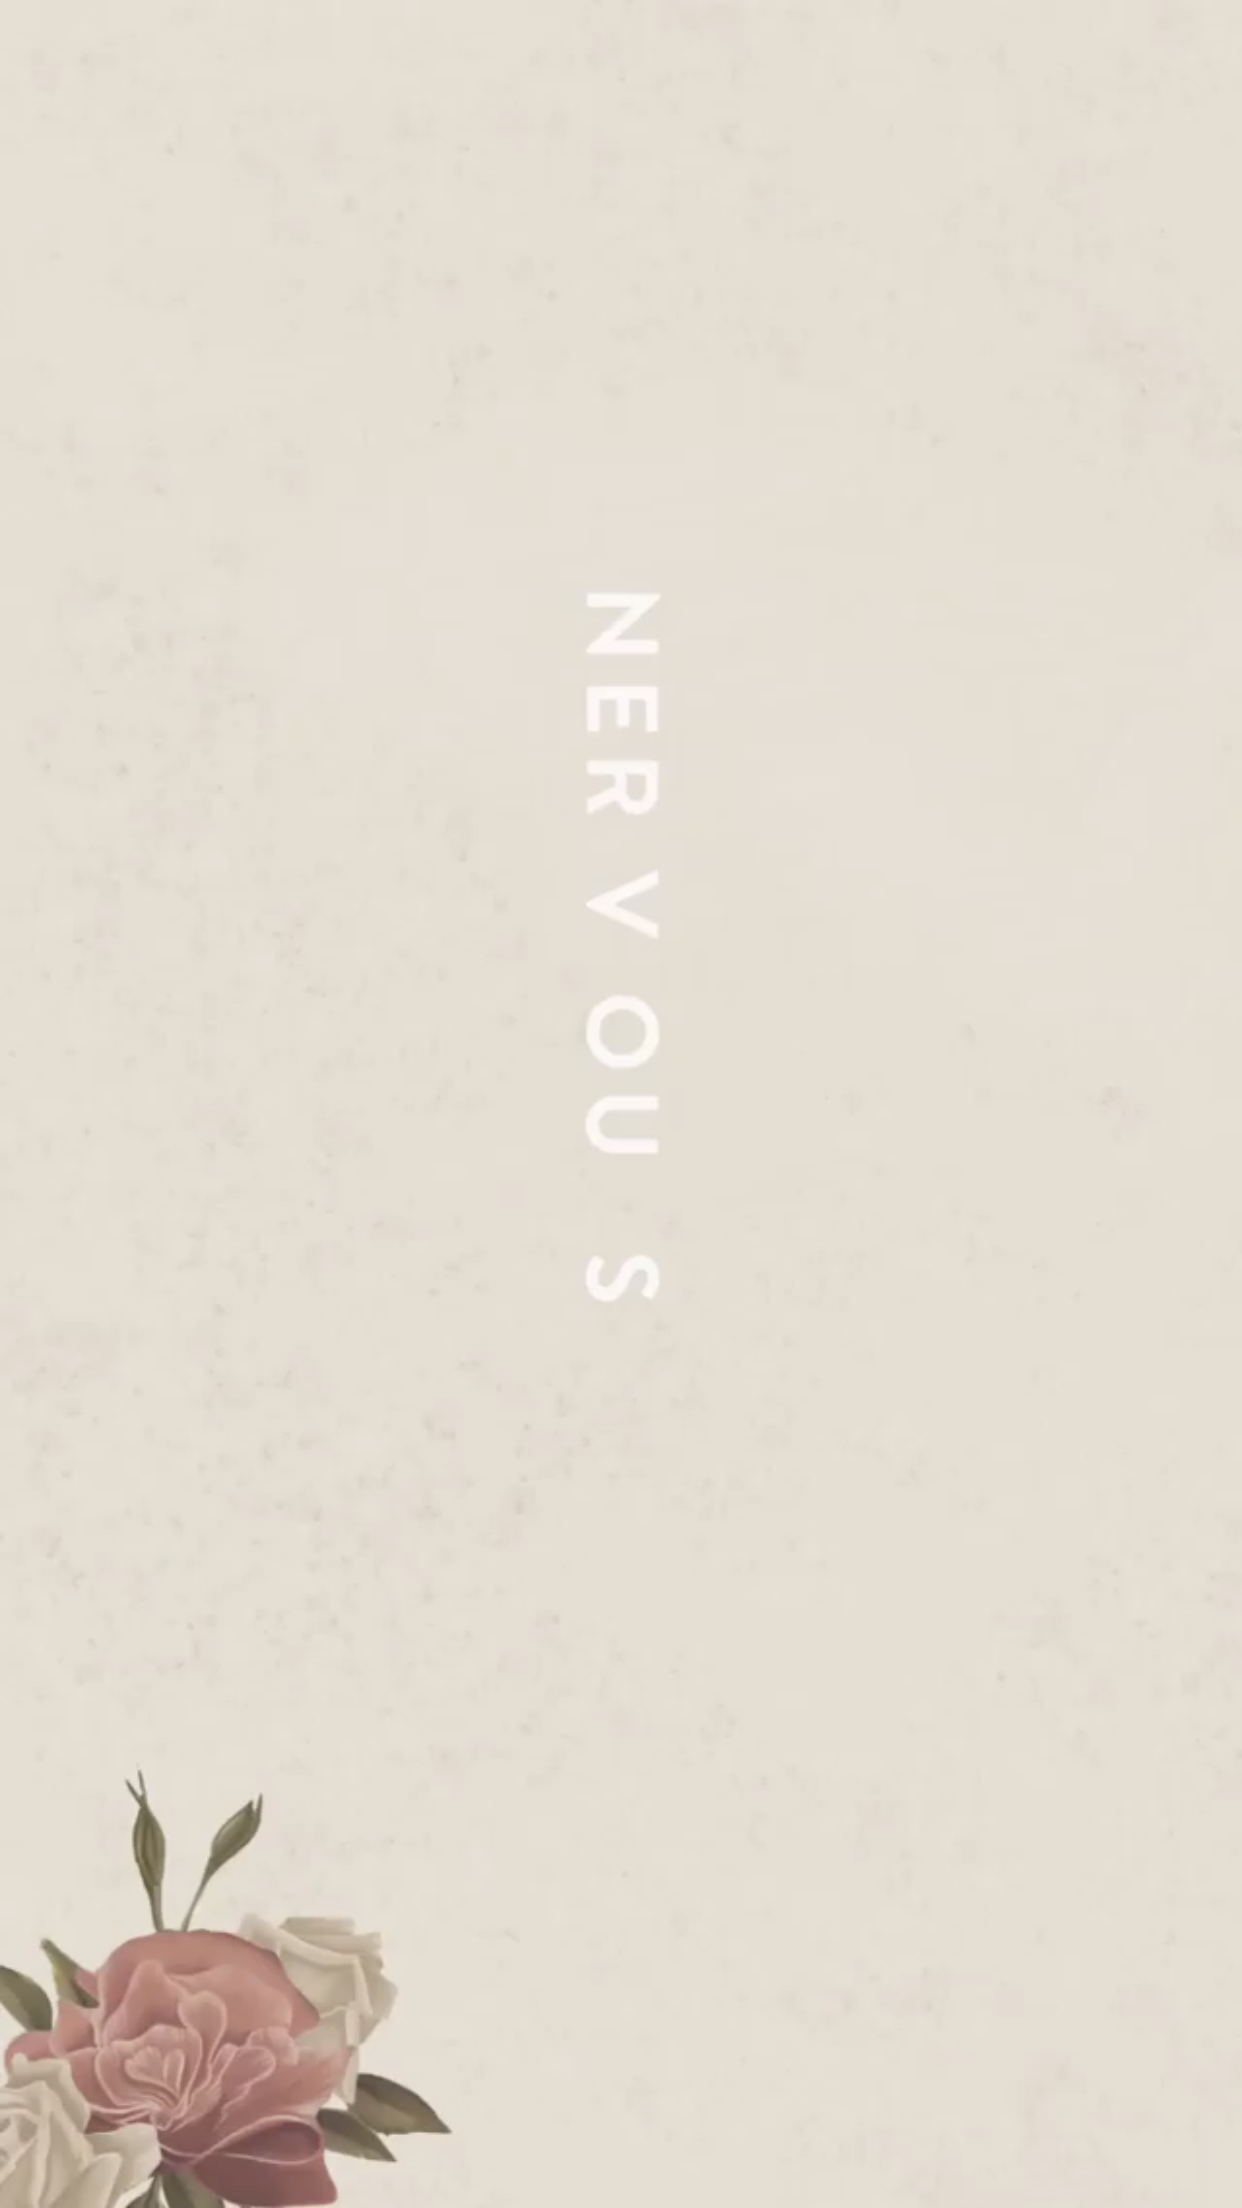 Shawn Mendes' single, Nervous phone .com